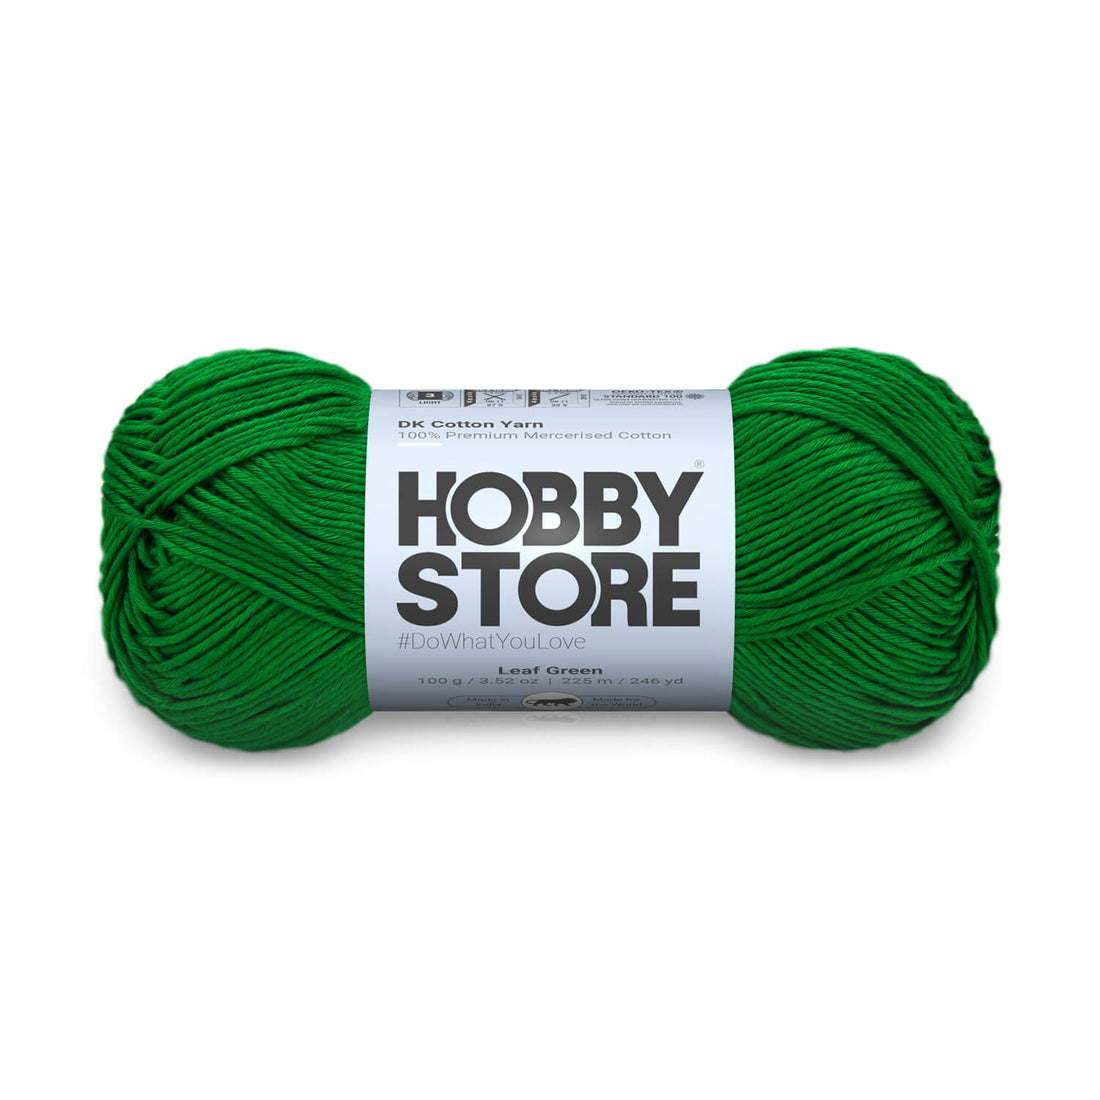 DK Mercerised Cotton Yarn by Hobby Store - Leaf Green - 323